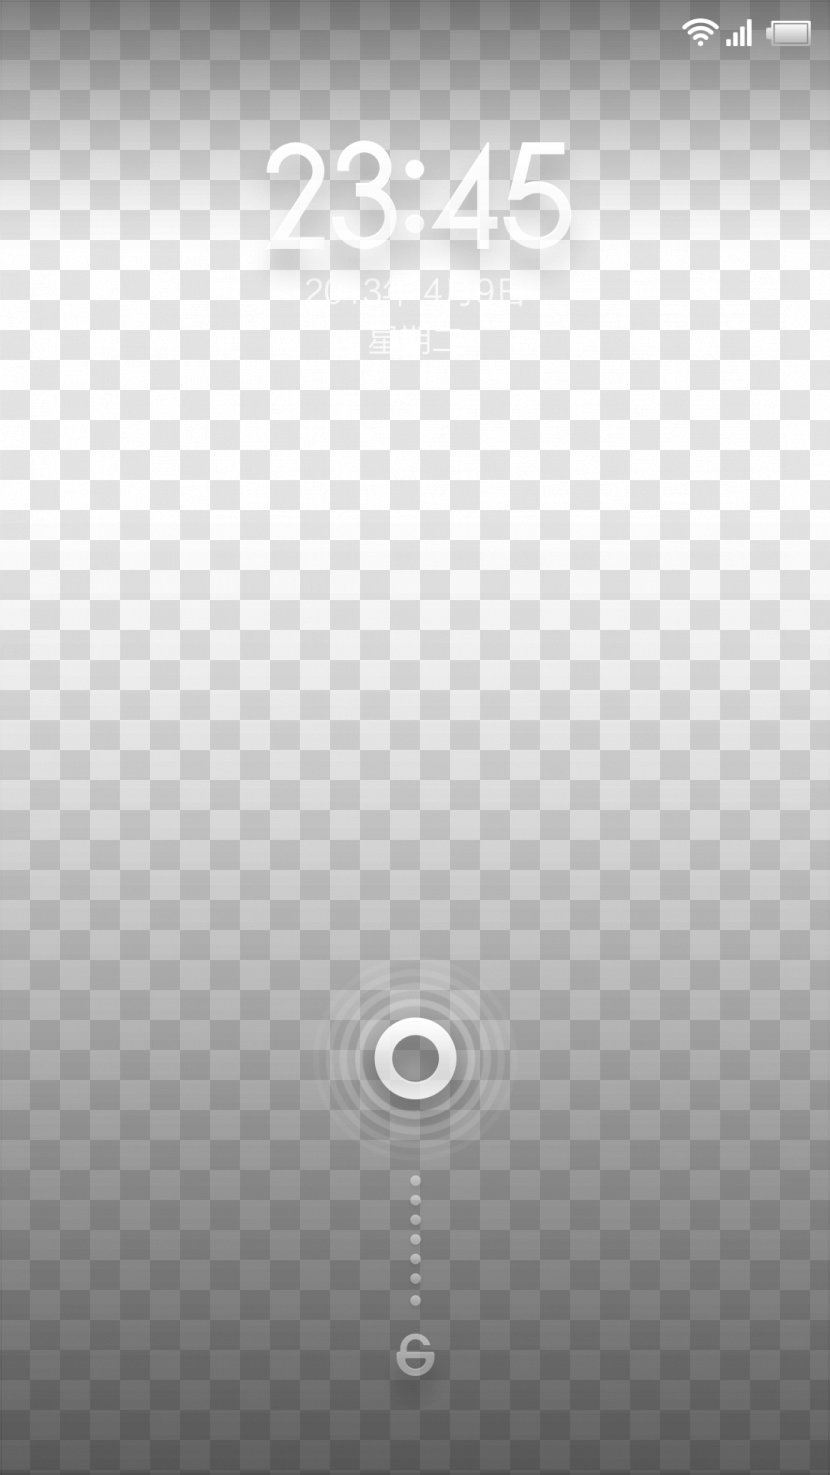 User Interface Button - The Phone Screen Unlocks Transparent PNG